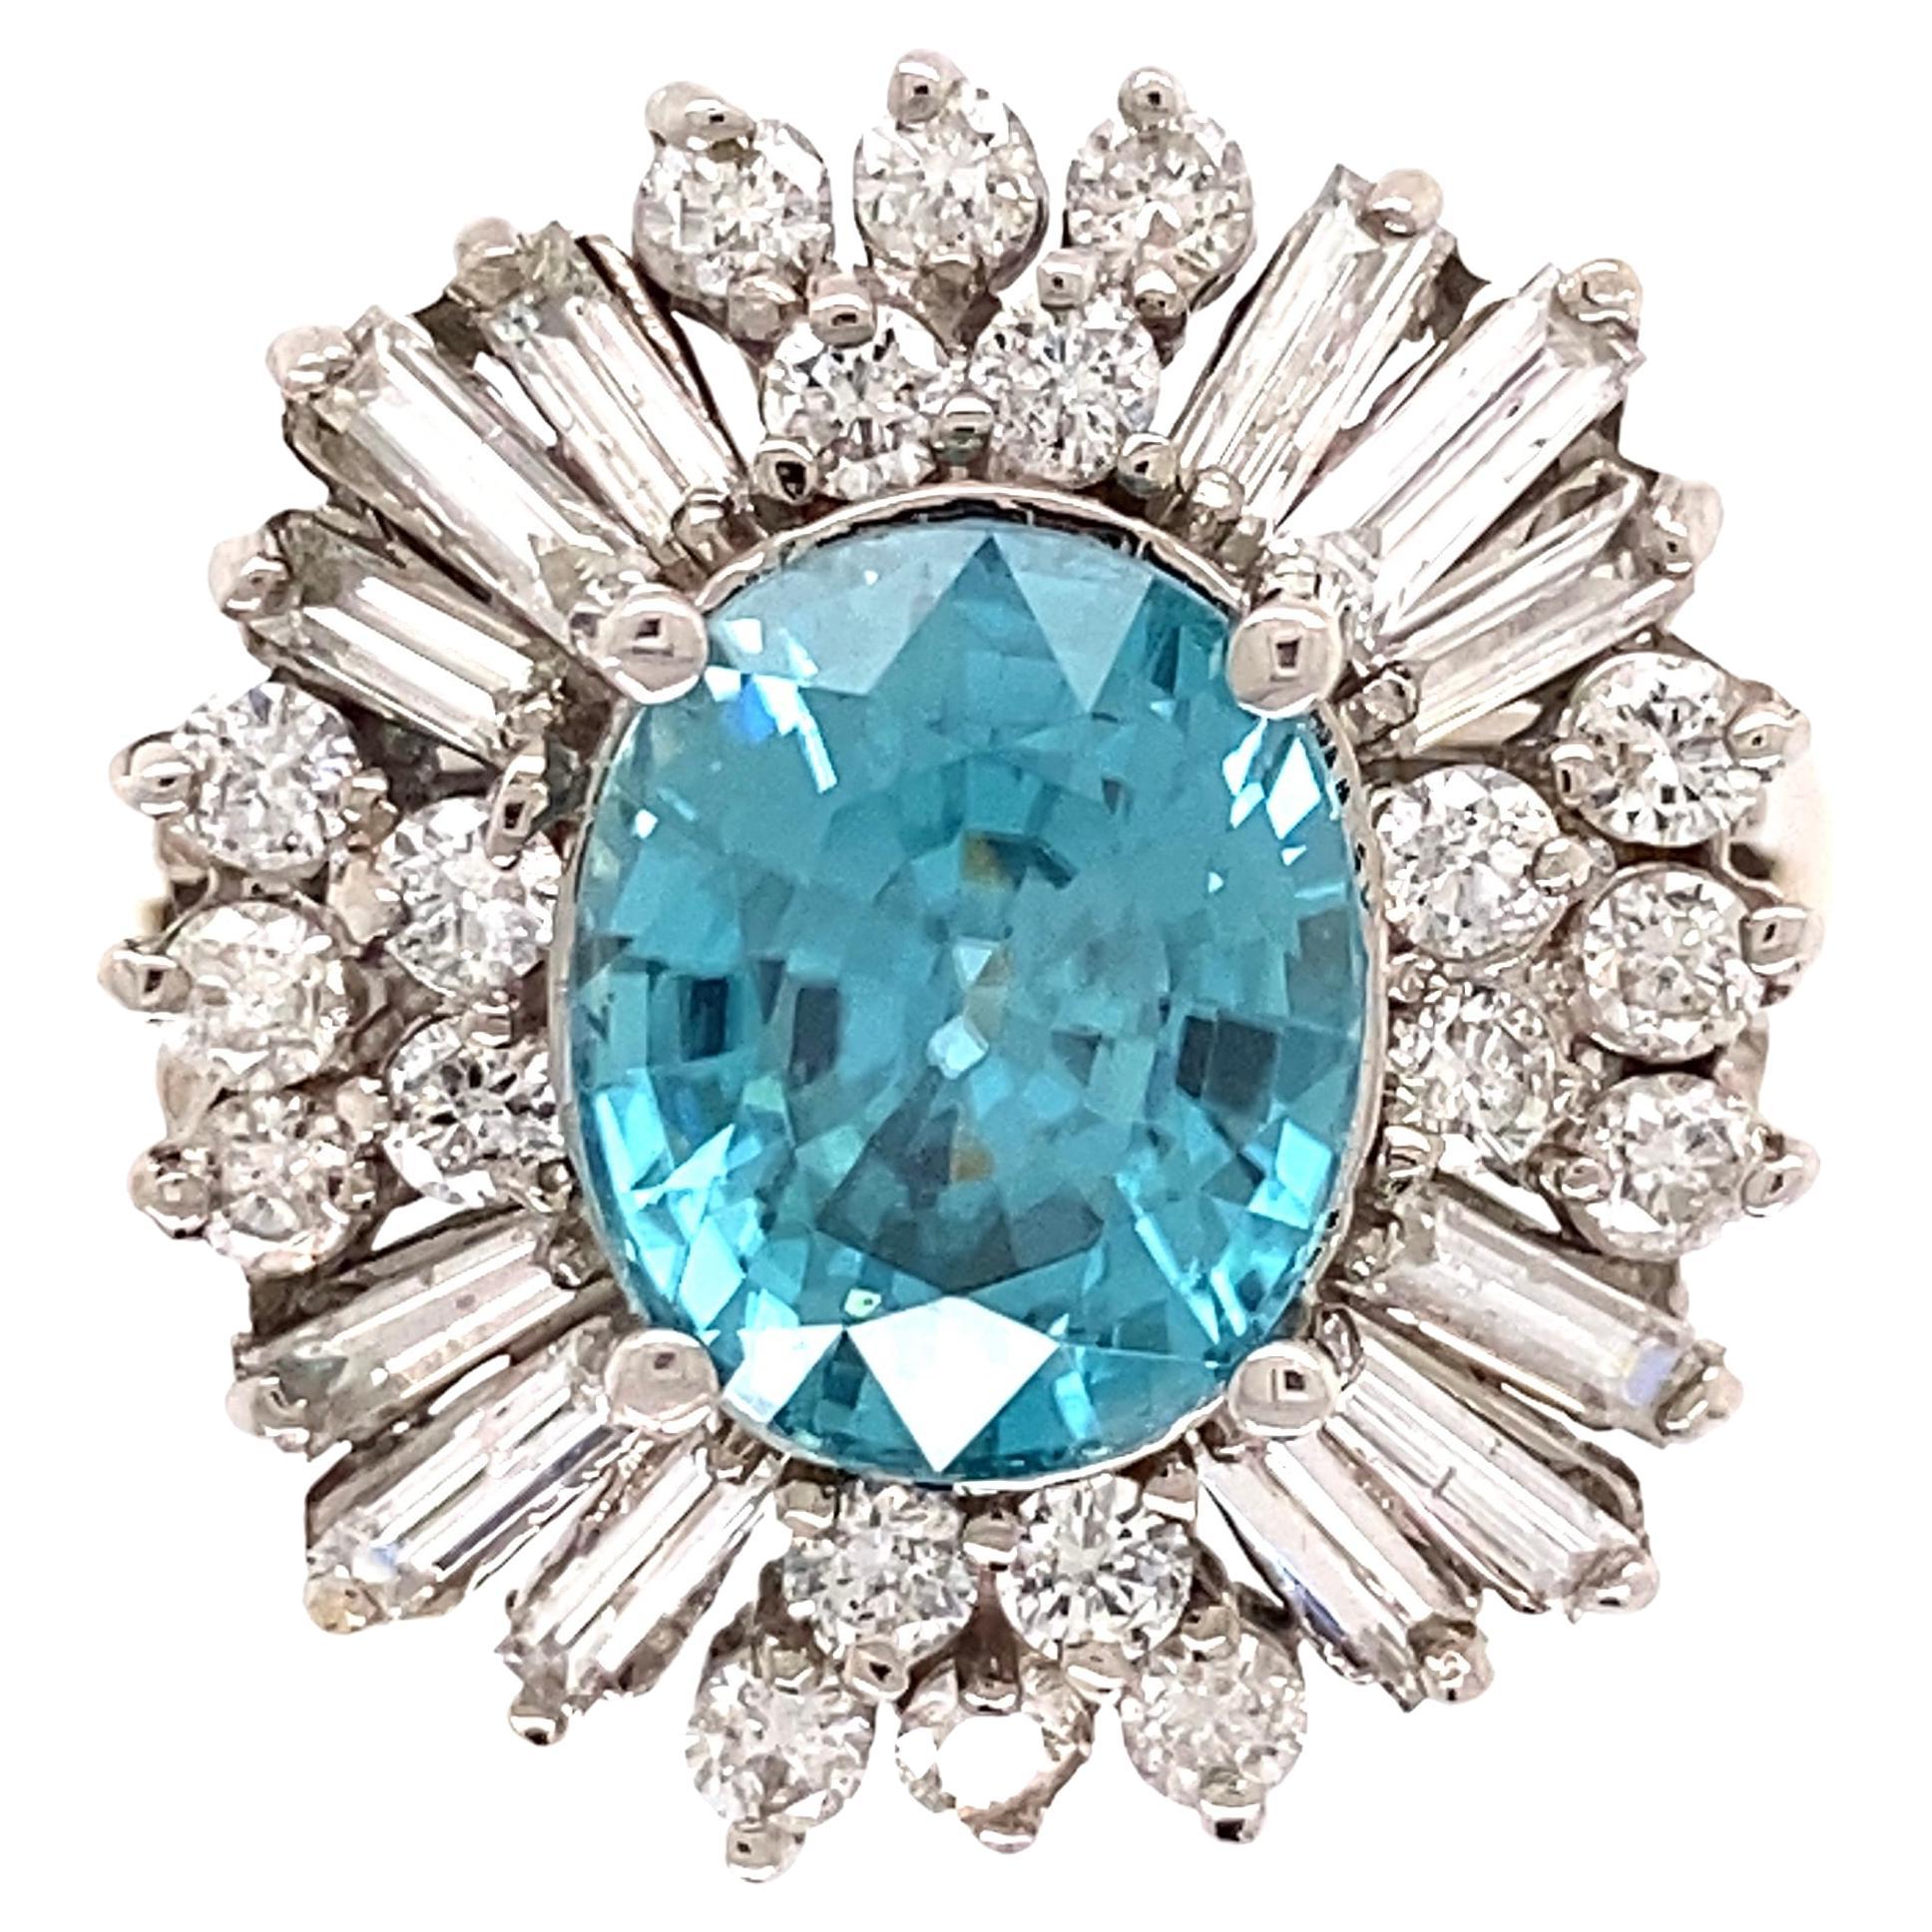 4.50 Carat Blue Zircon and Diamond Cocktail Ring Estate Fine Jewelry